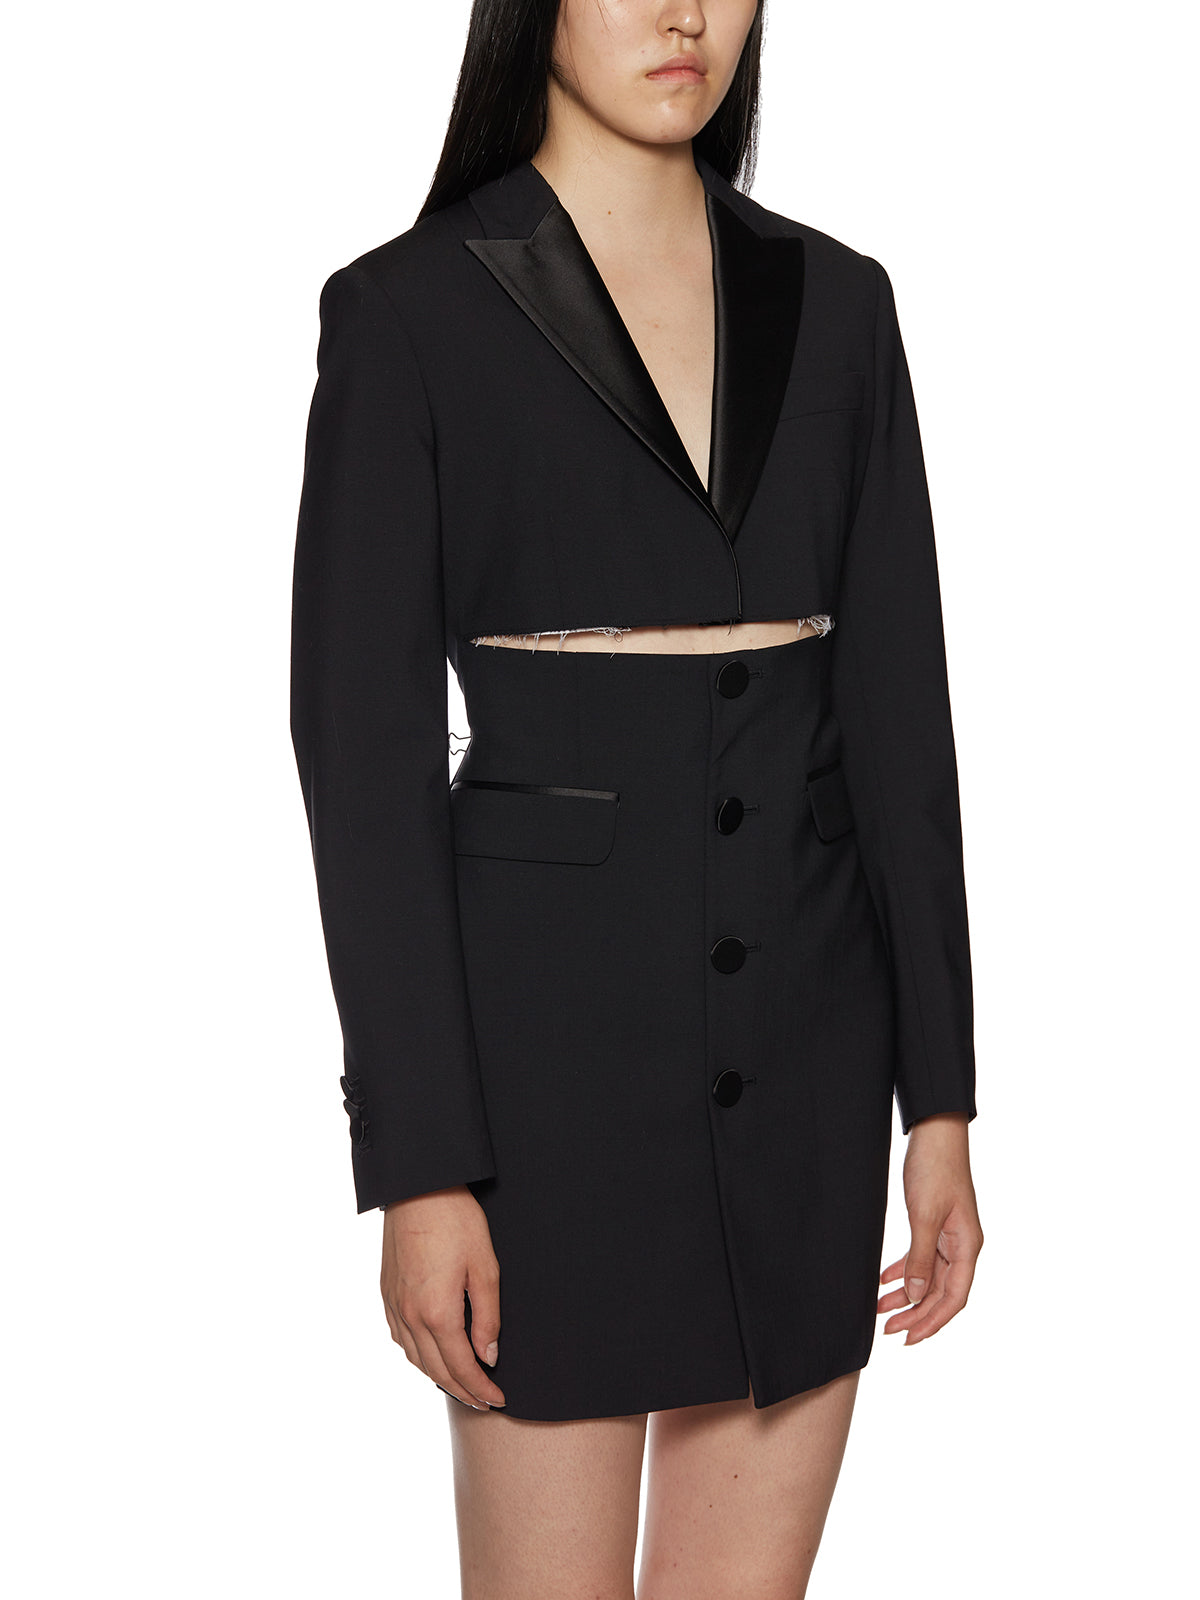 DSQUARED2 Sleek Black Virgin Wool Dress for Women - FW21